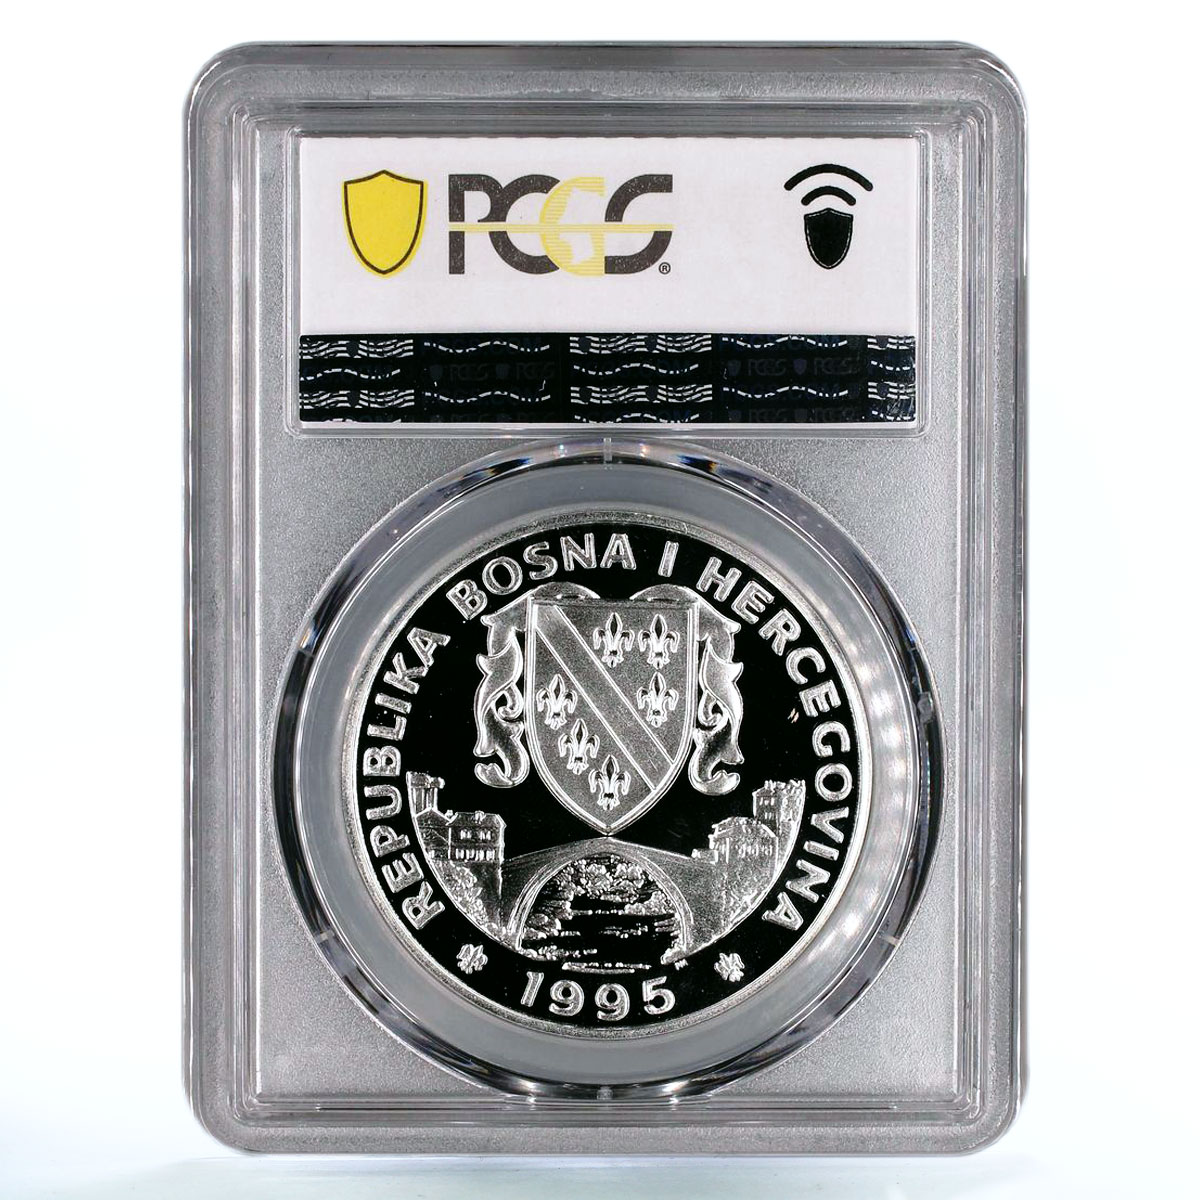 Bosnia and Herzegovina 750 dinara Youth Olympics Rings PR69 PCGS Ag coin 1995